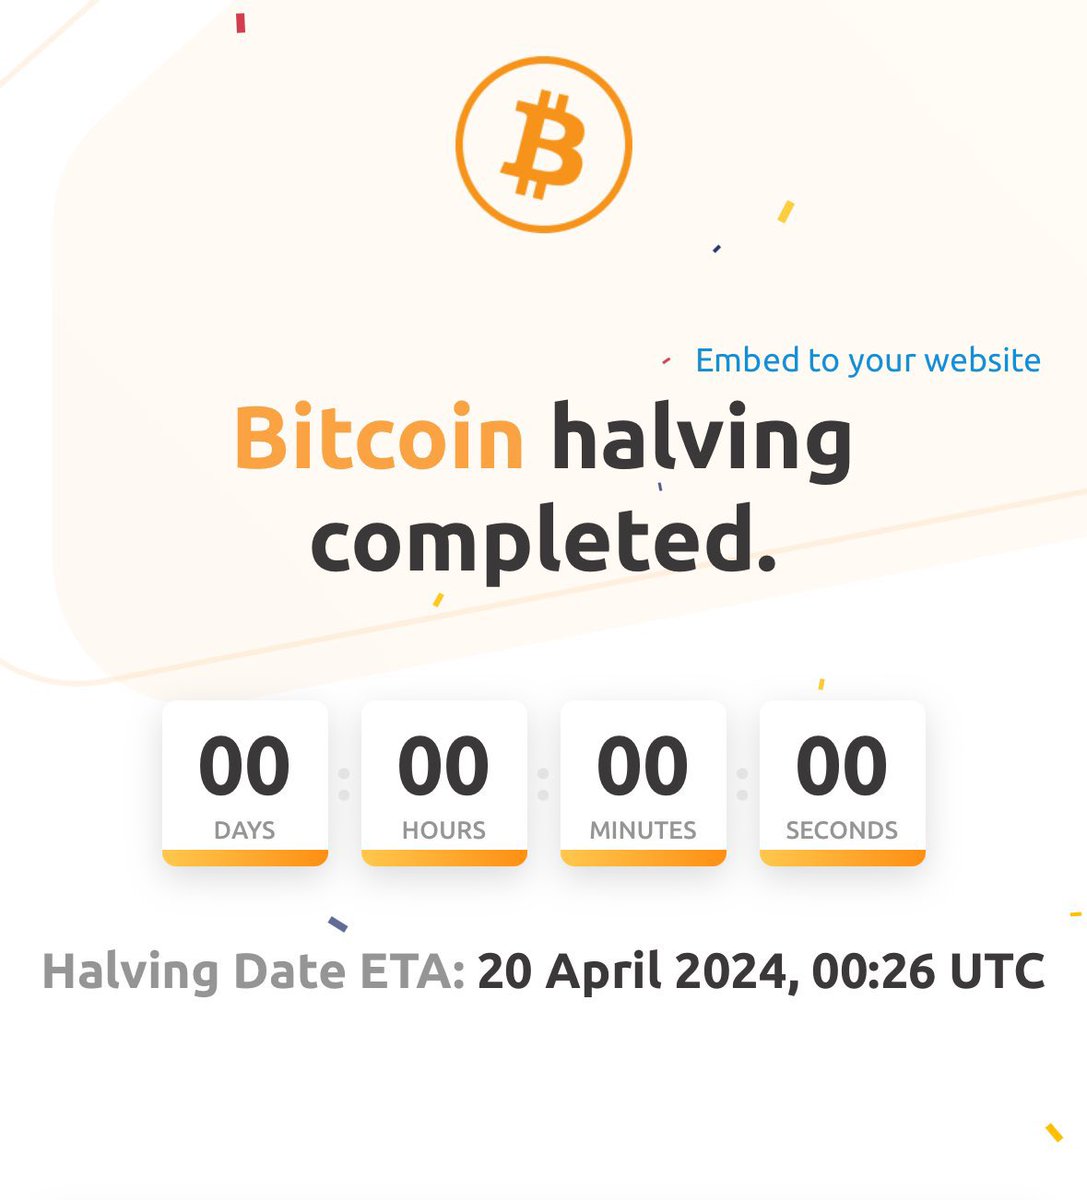 Happy Bitcoin halving day !